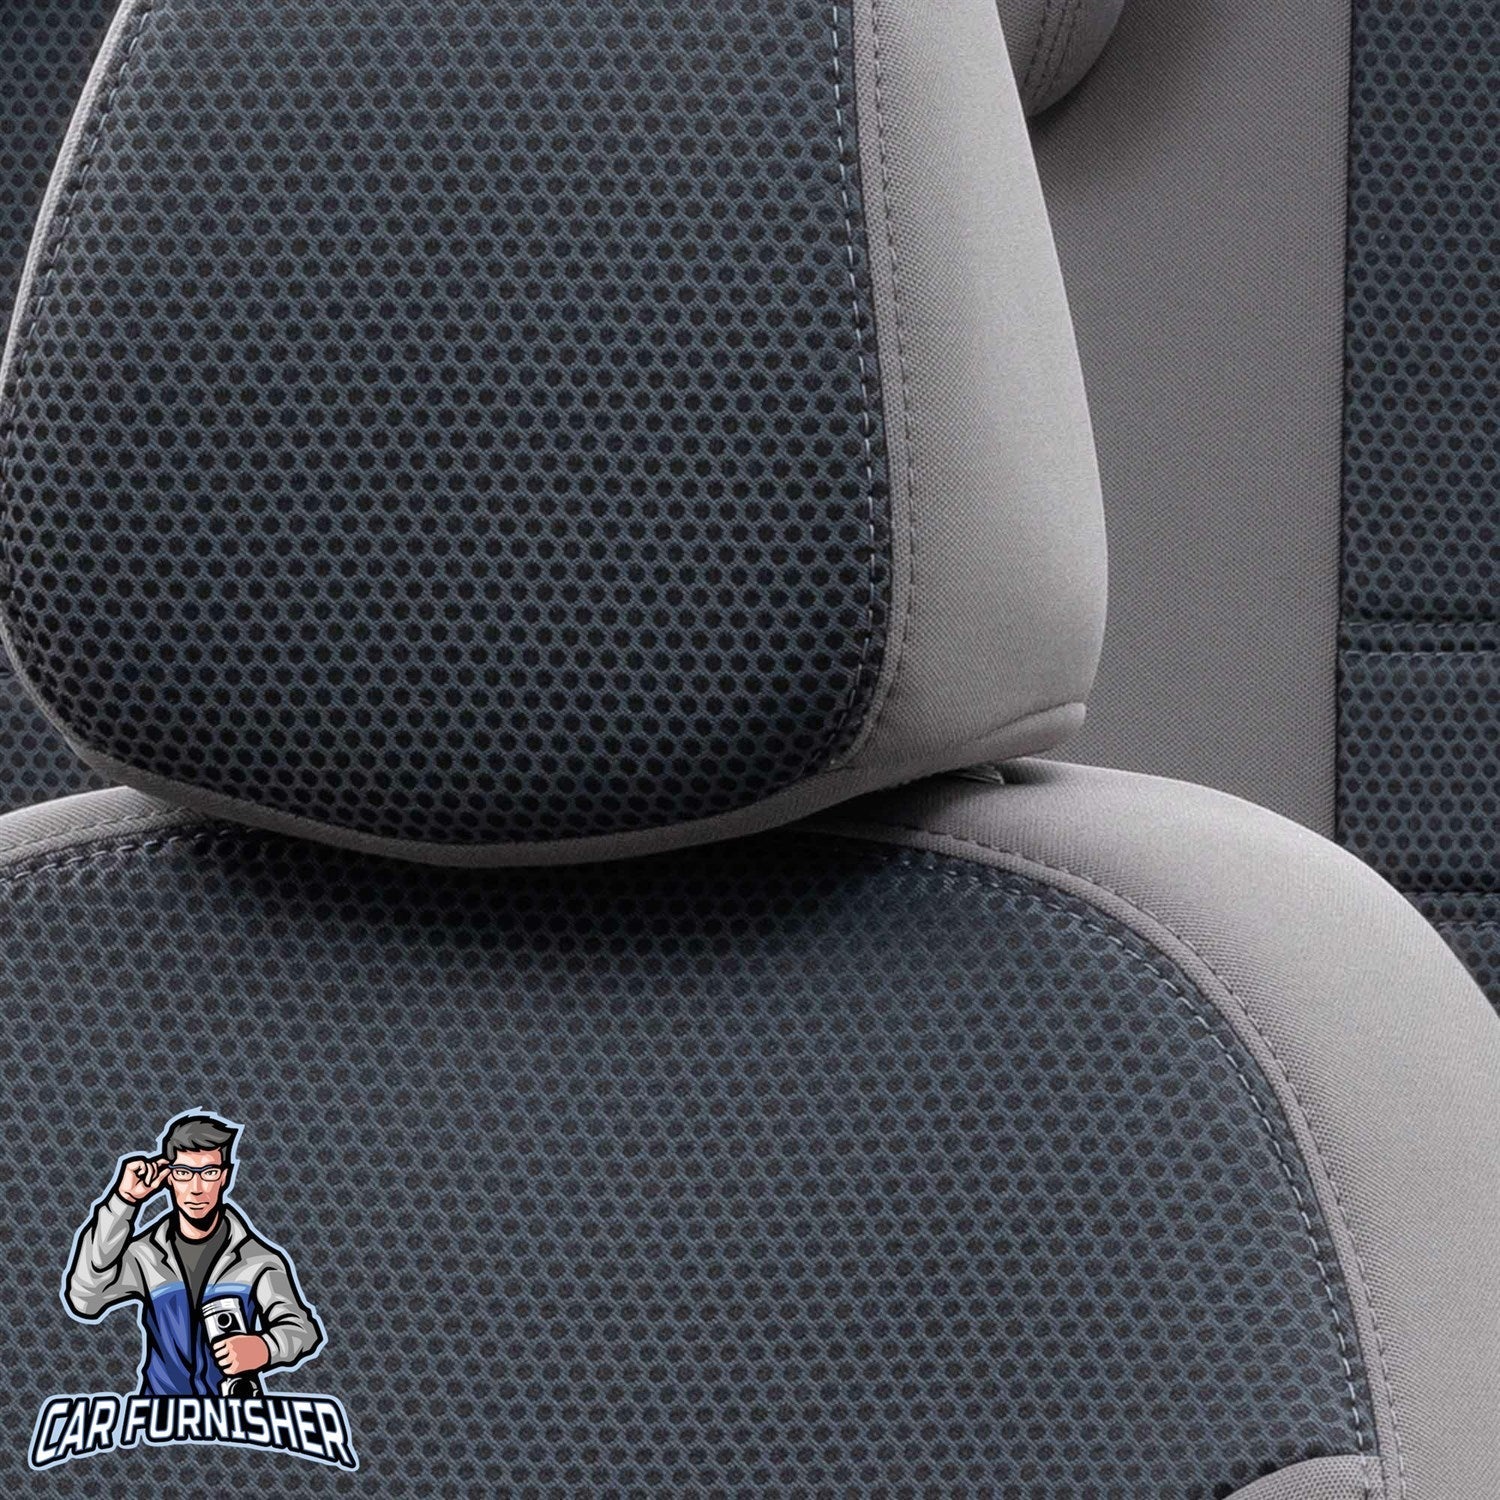 Chevrolet Cruze Car Seat Covers 2009-2016 Original Design Smoked Full Set (5 Seats + Handrest) Fabric